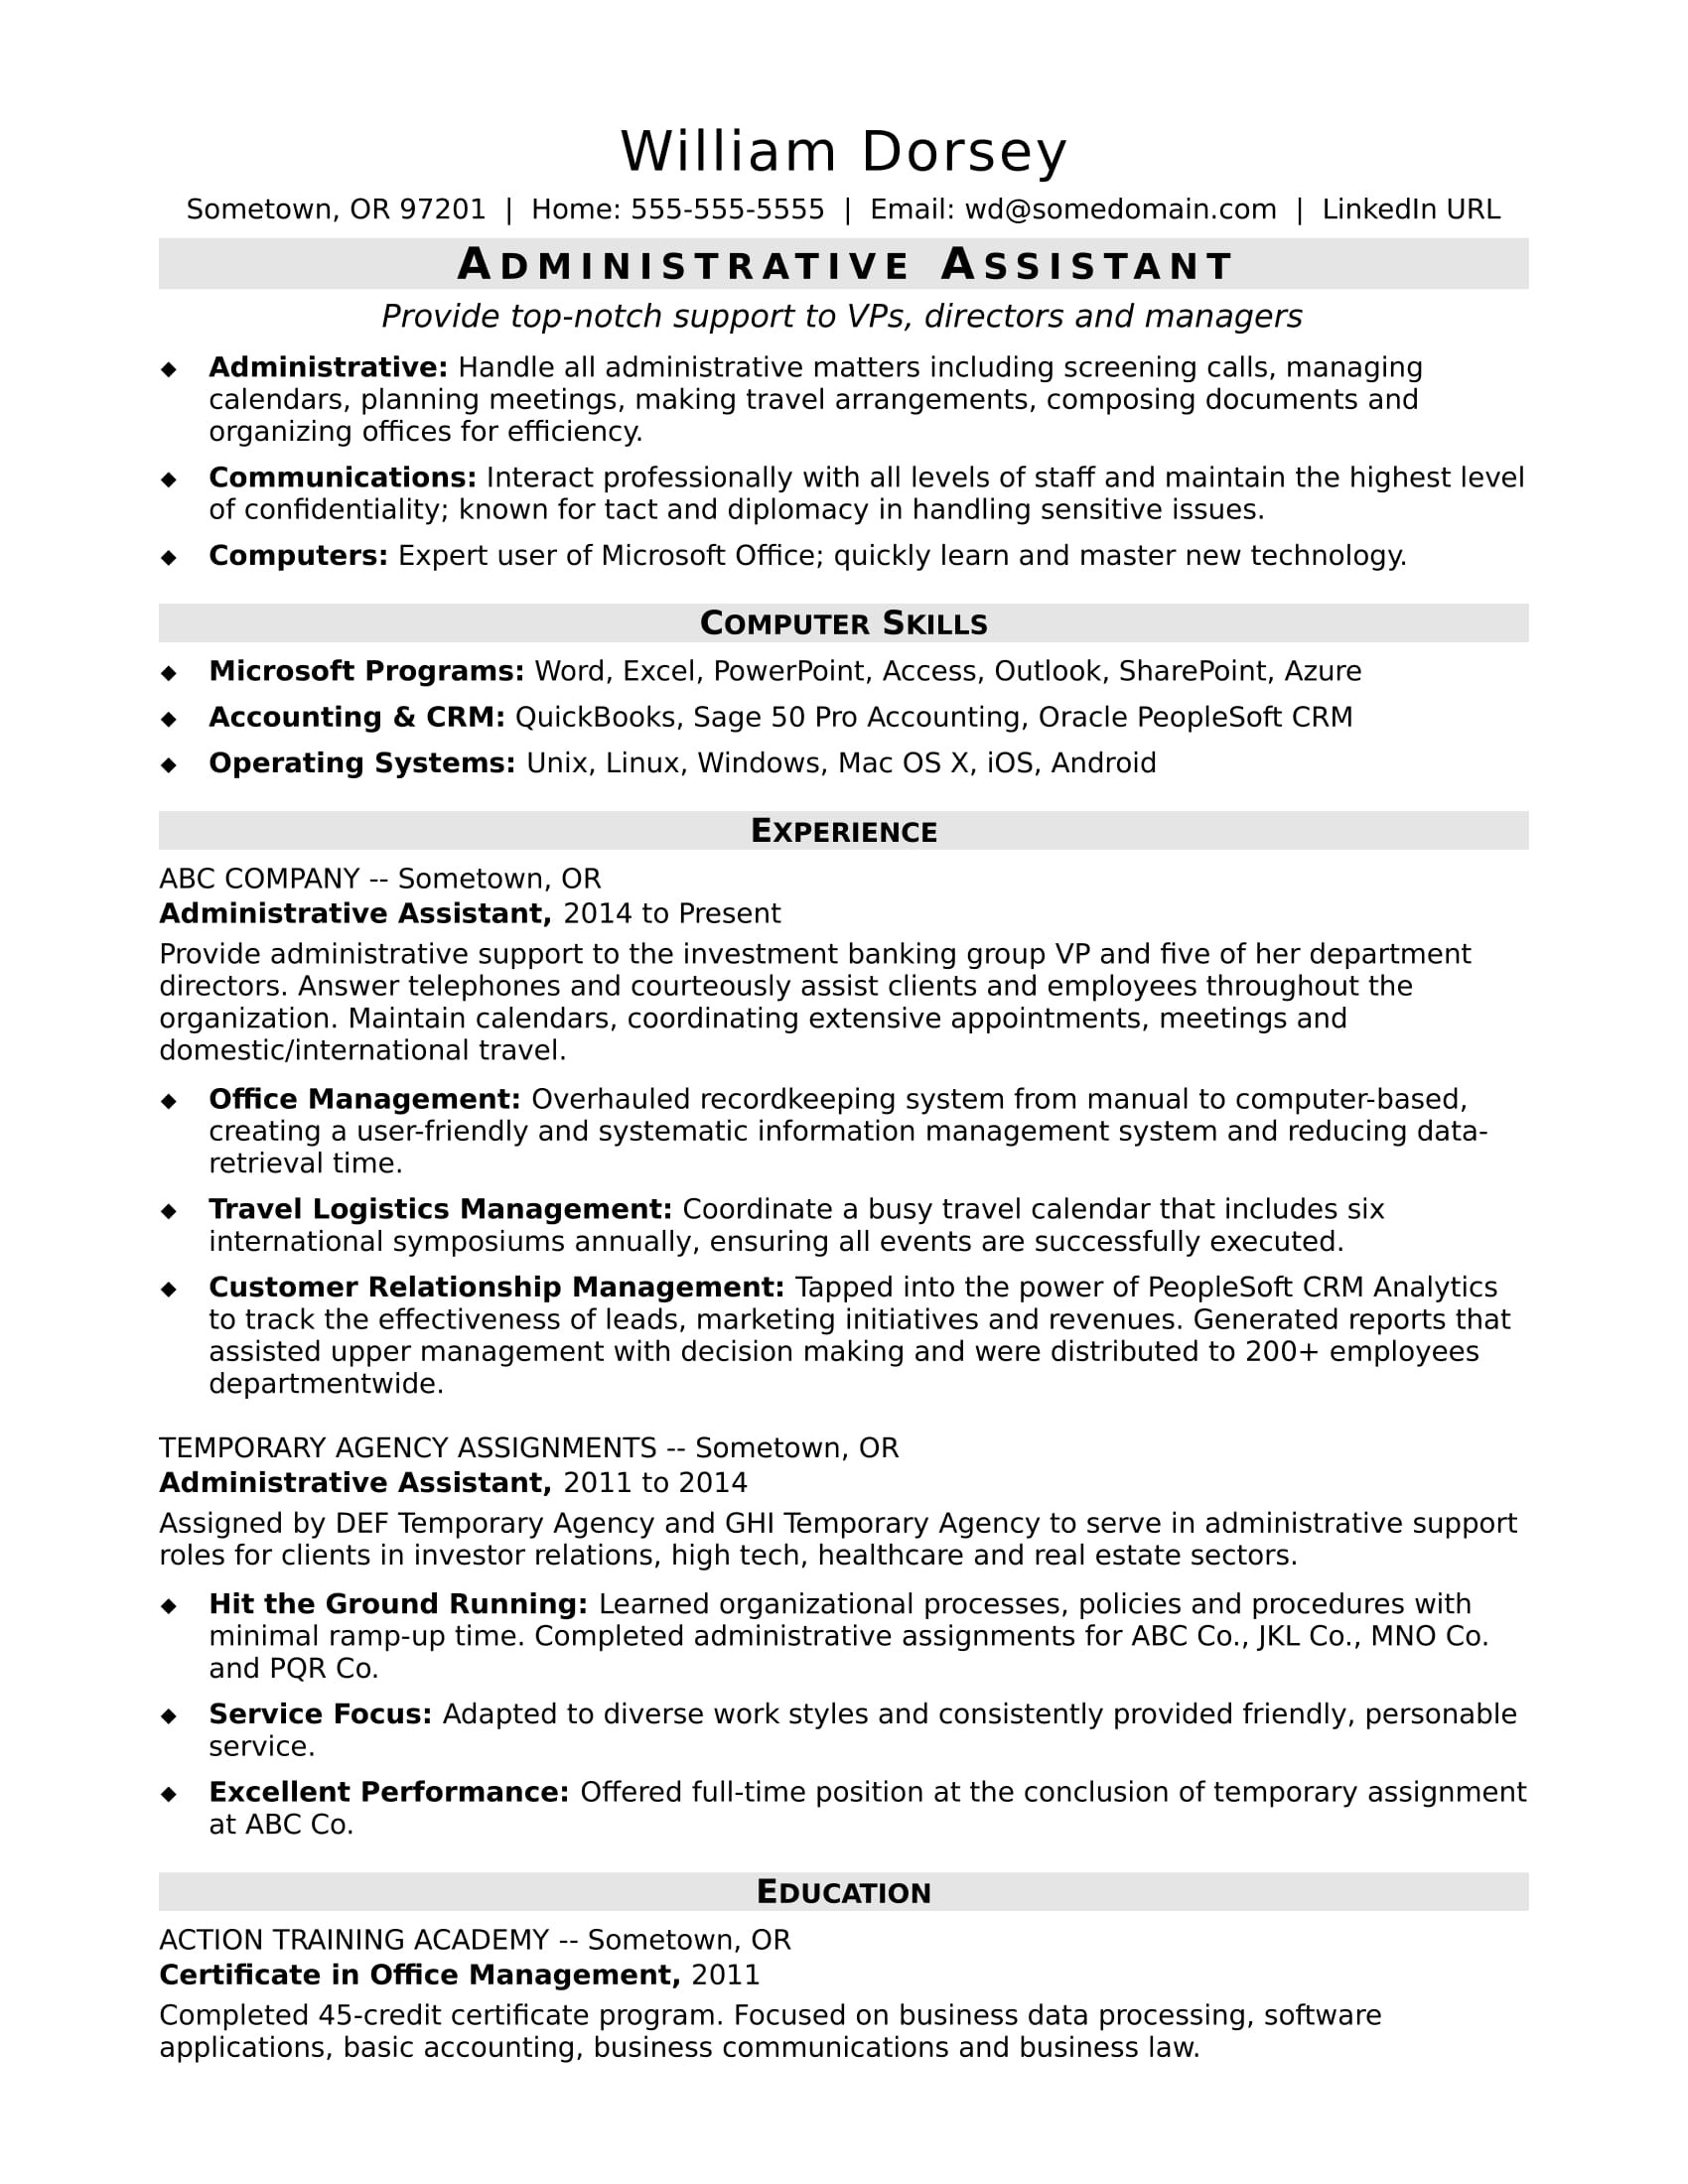 Sample Resume Administrative assistant Entry Level Administrative assistant Resume Sample Monster.com